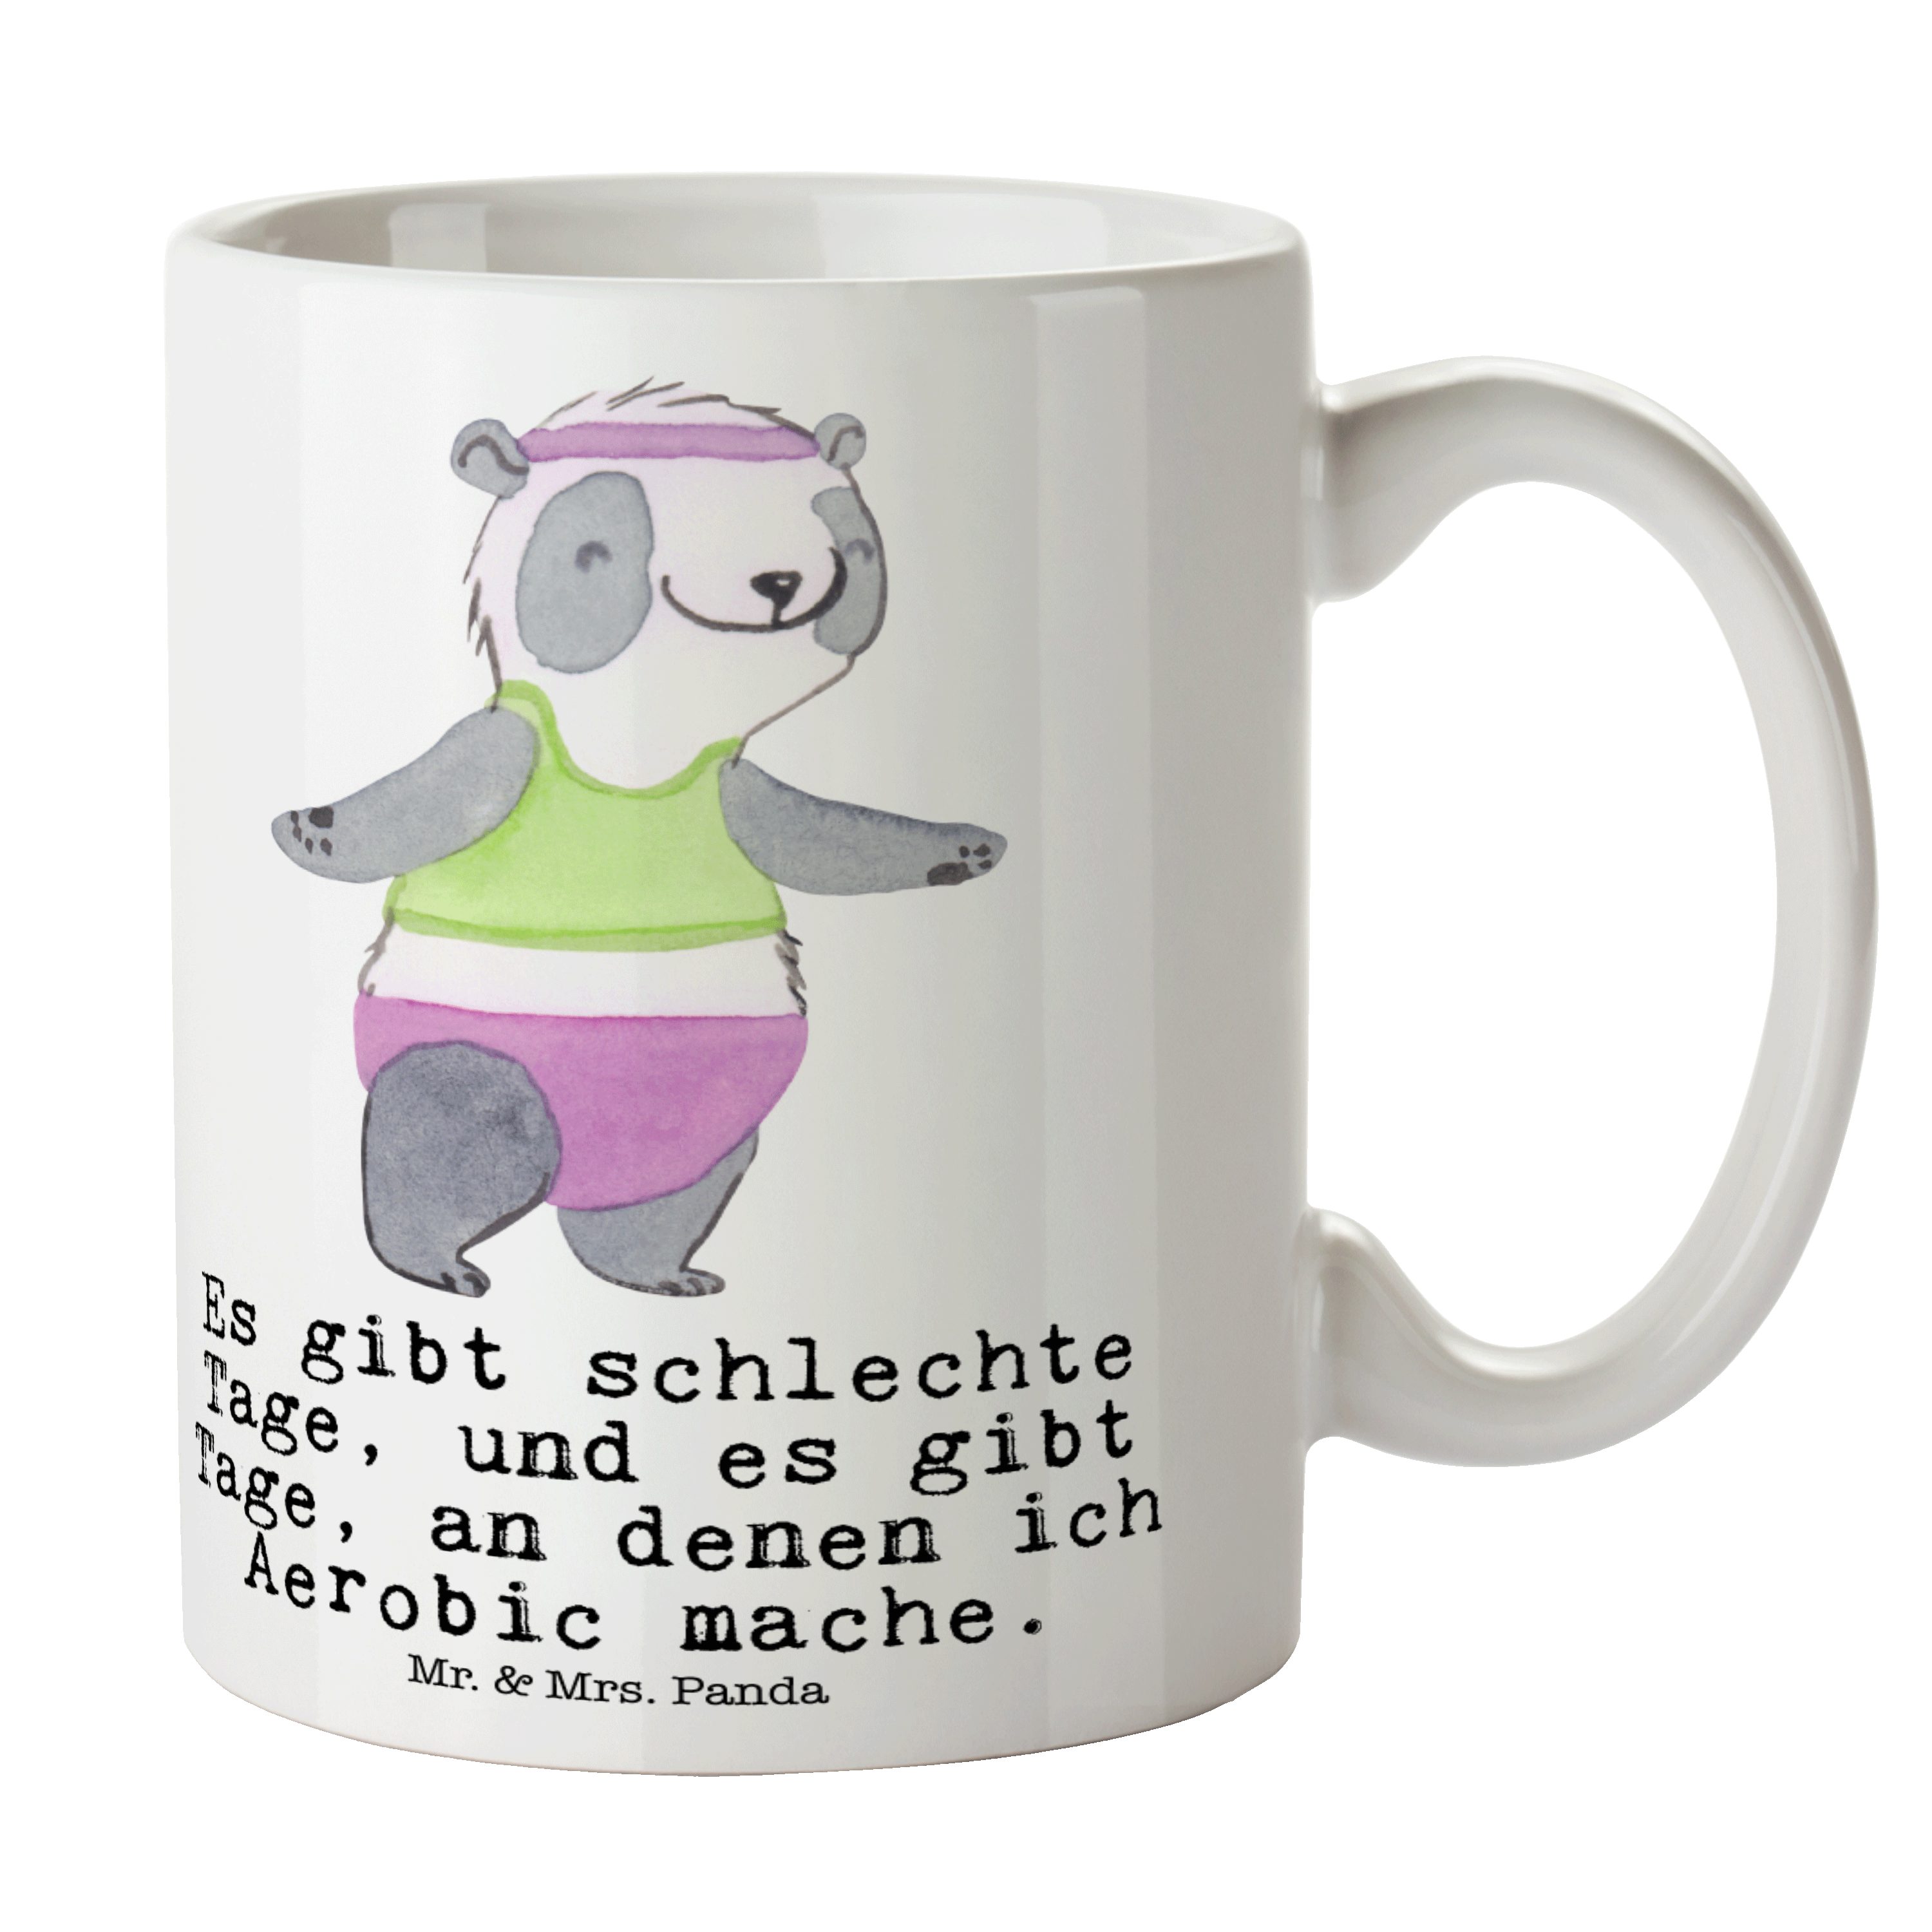 Mr. & Mrs. Panda Tasse Panda Aerobic Tage - Weiß - Geschenk, Kaffeetasse, Kaffeebecher, Aero, Keramik